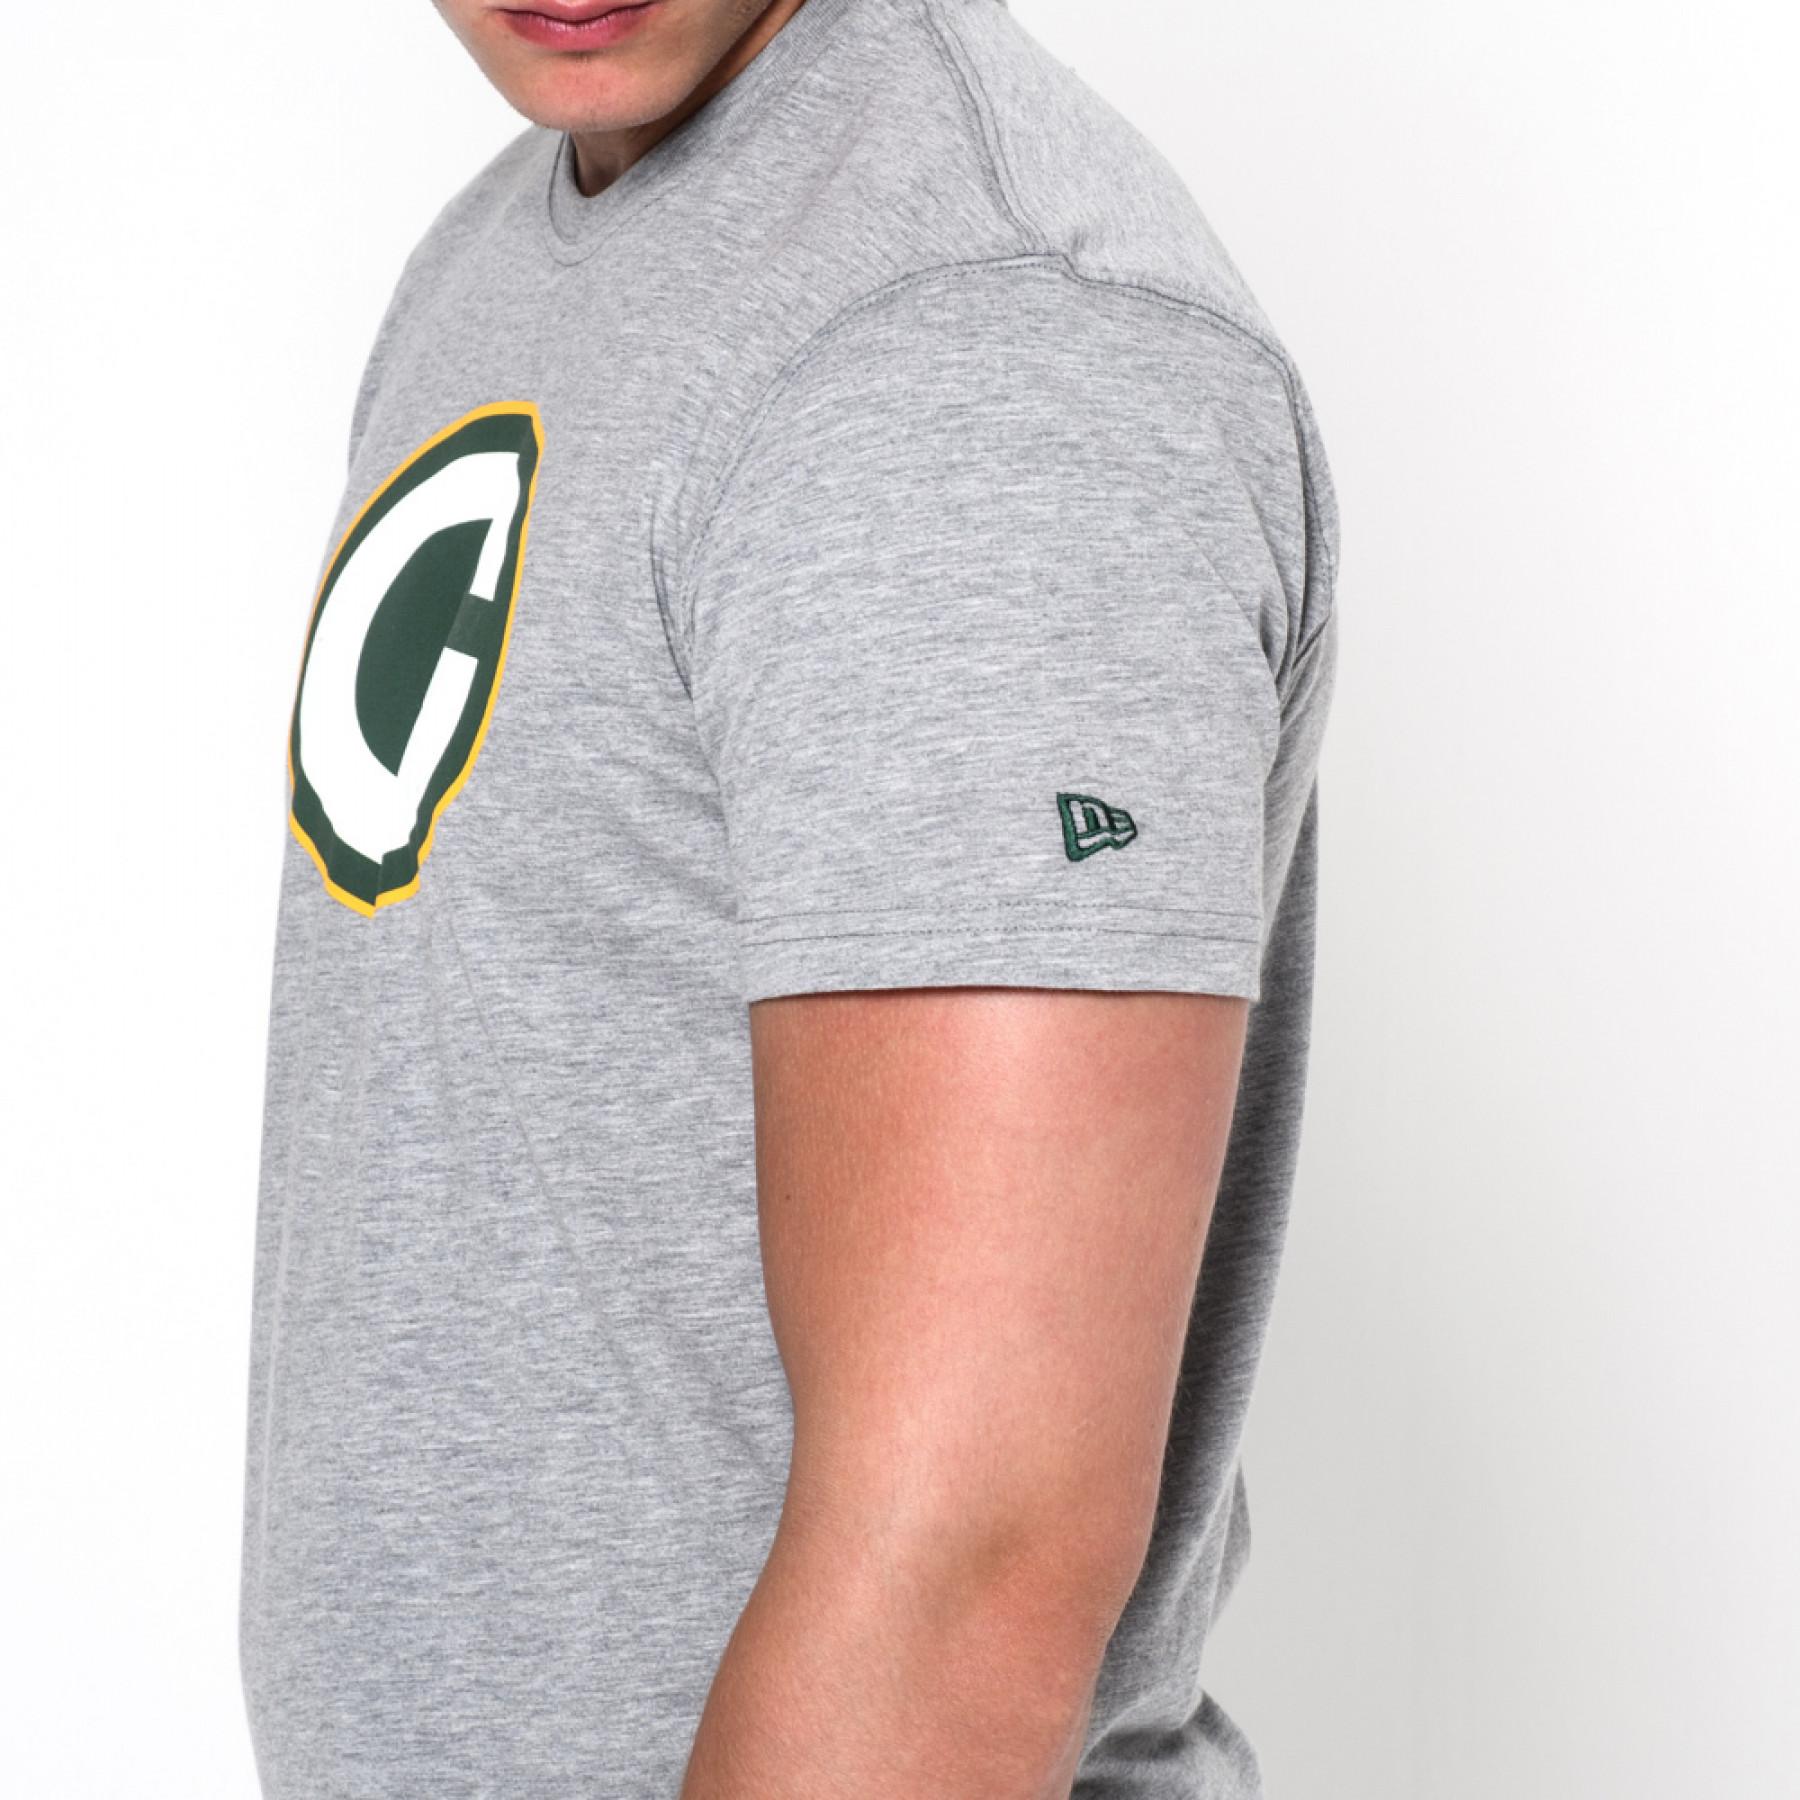 Camiseta New Era logo Green Bay Packers